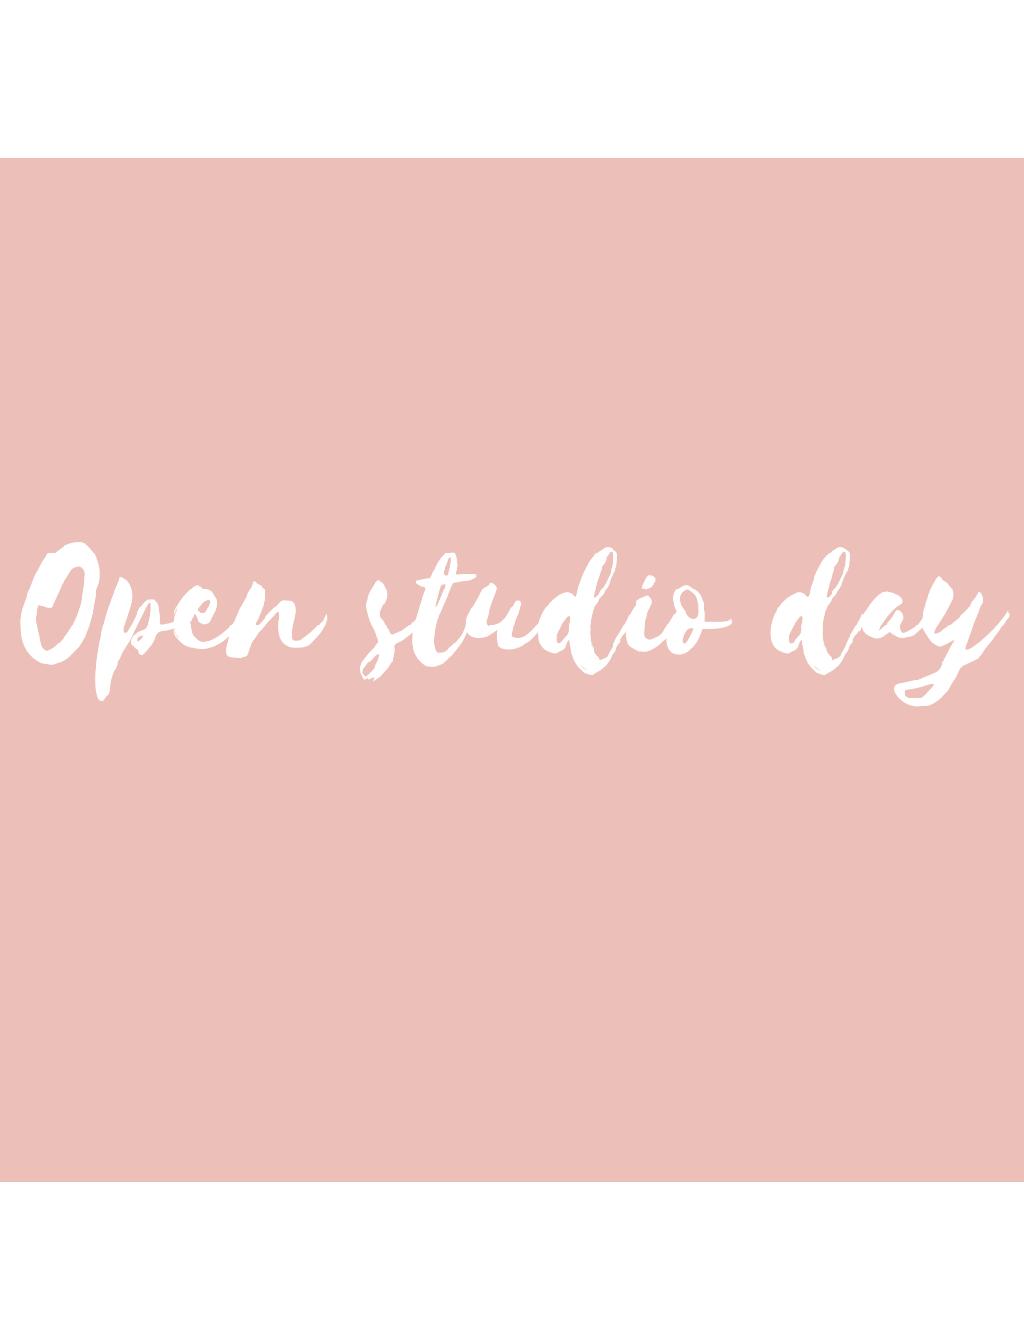 Studio open day 3:00-3:30